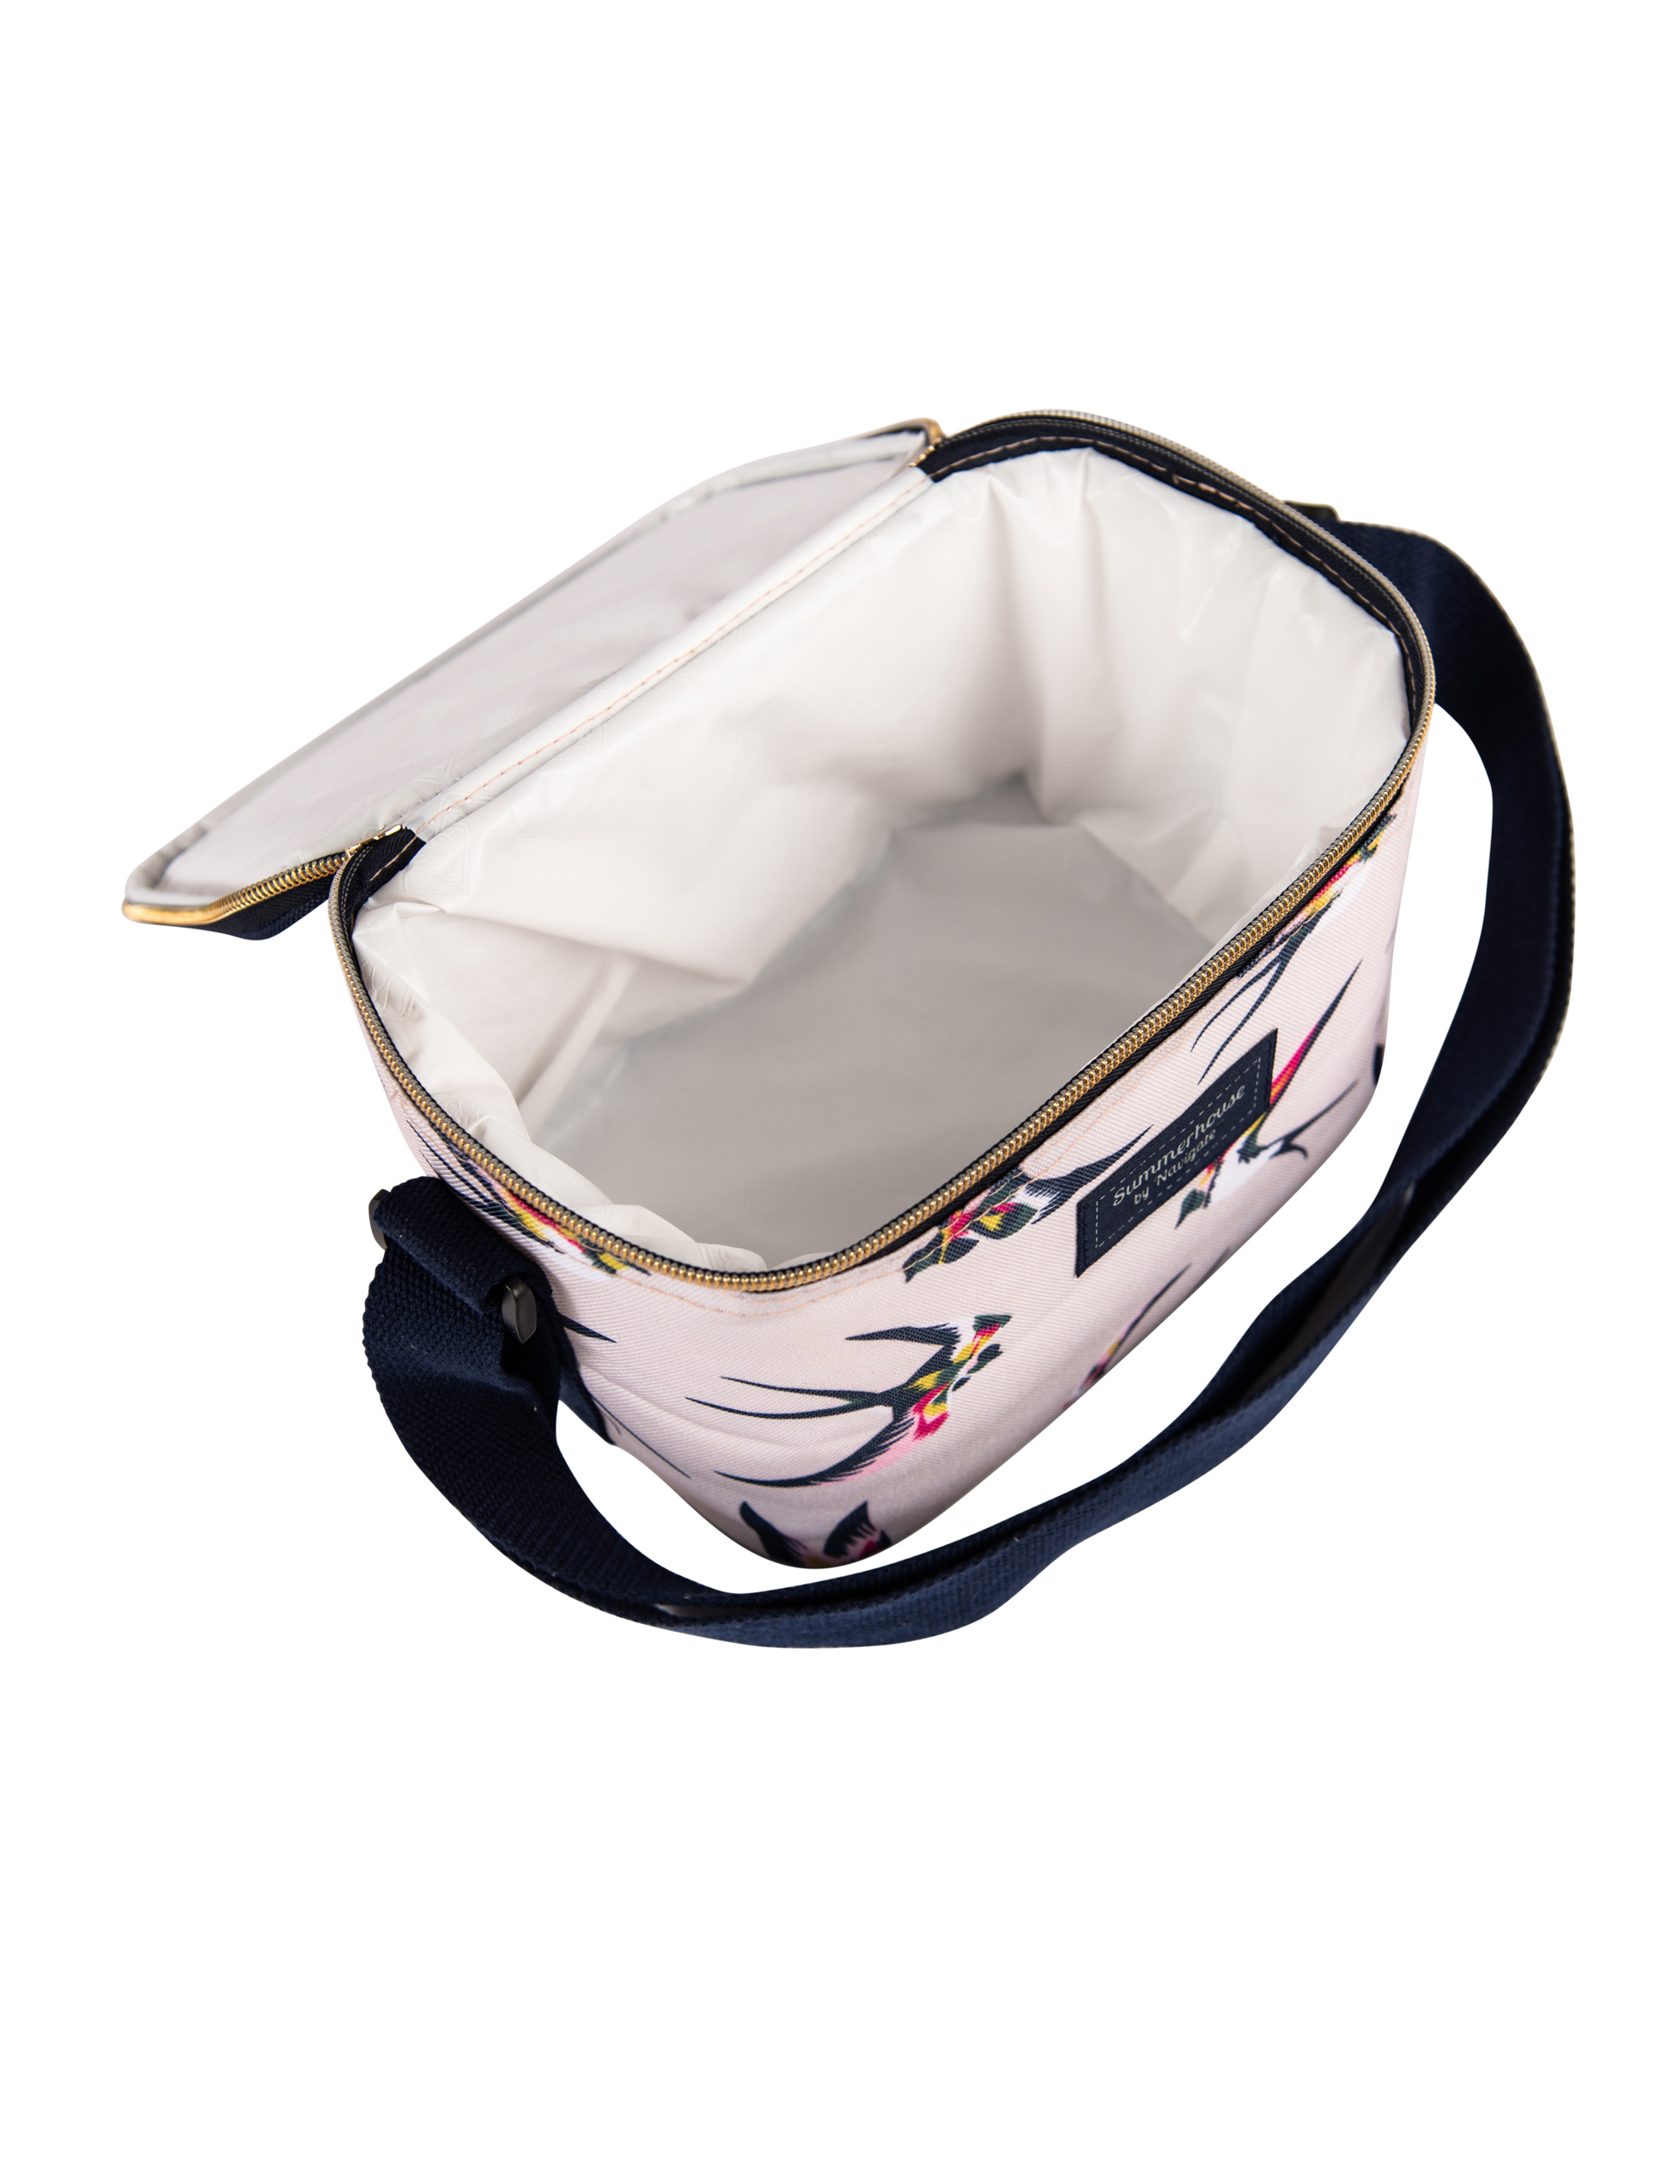 Designer luxury Guatemala Personal insulated Cool Bag 4L